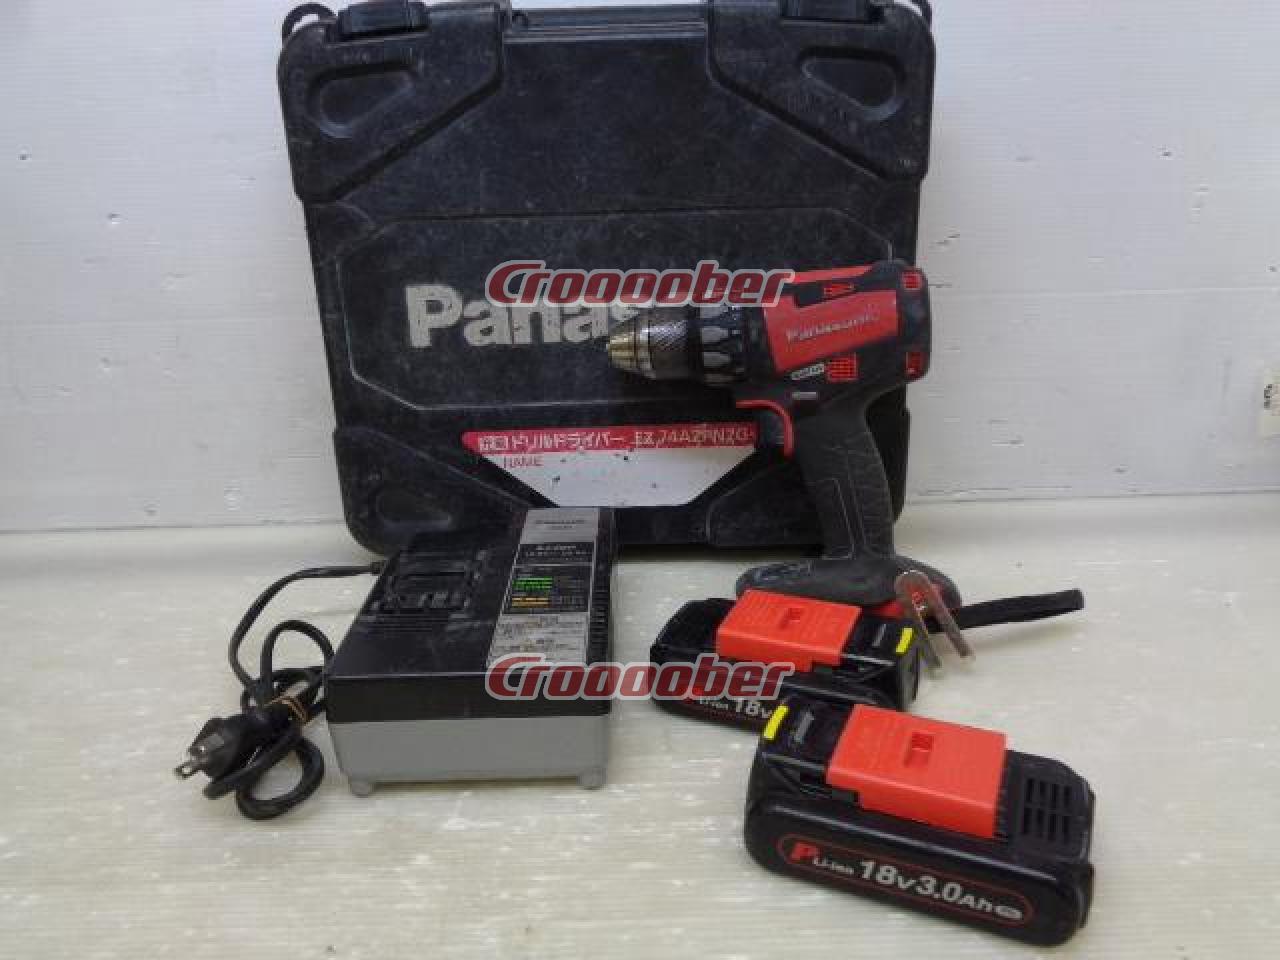 Panasonic(パナソニック) 18V 充電式ドリルドライバ EZ74A2 | ドリル、ドライバ ドリルドライバパーツの通販なら